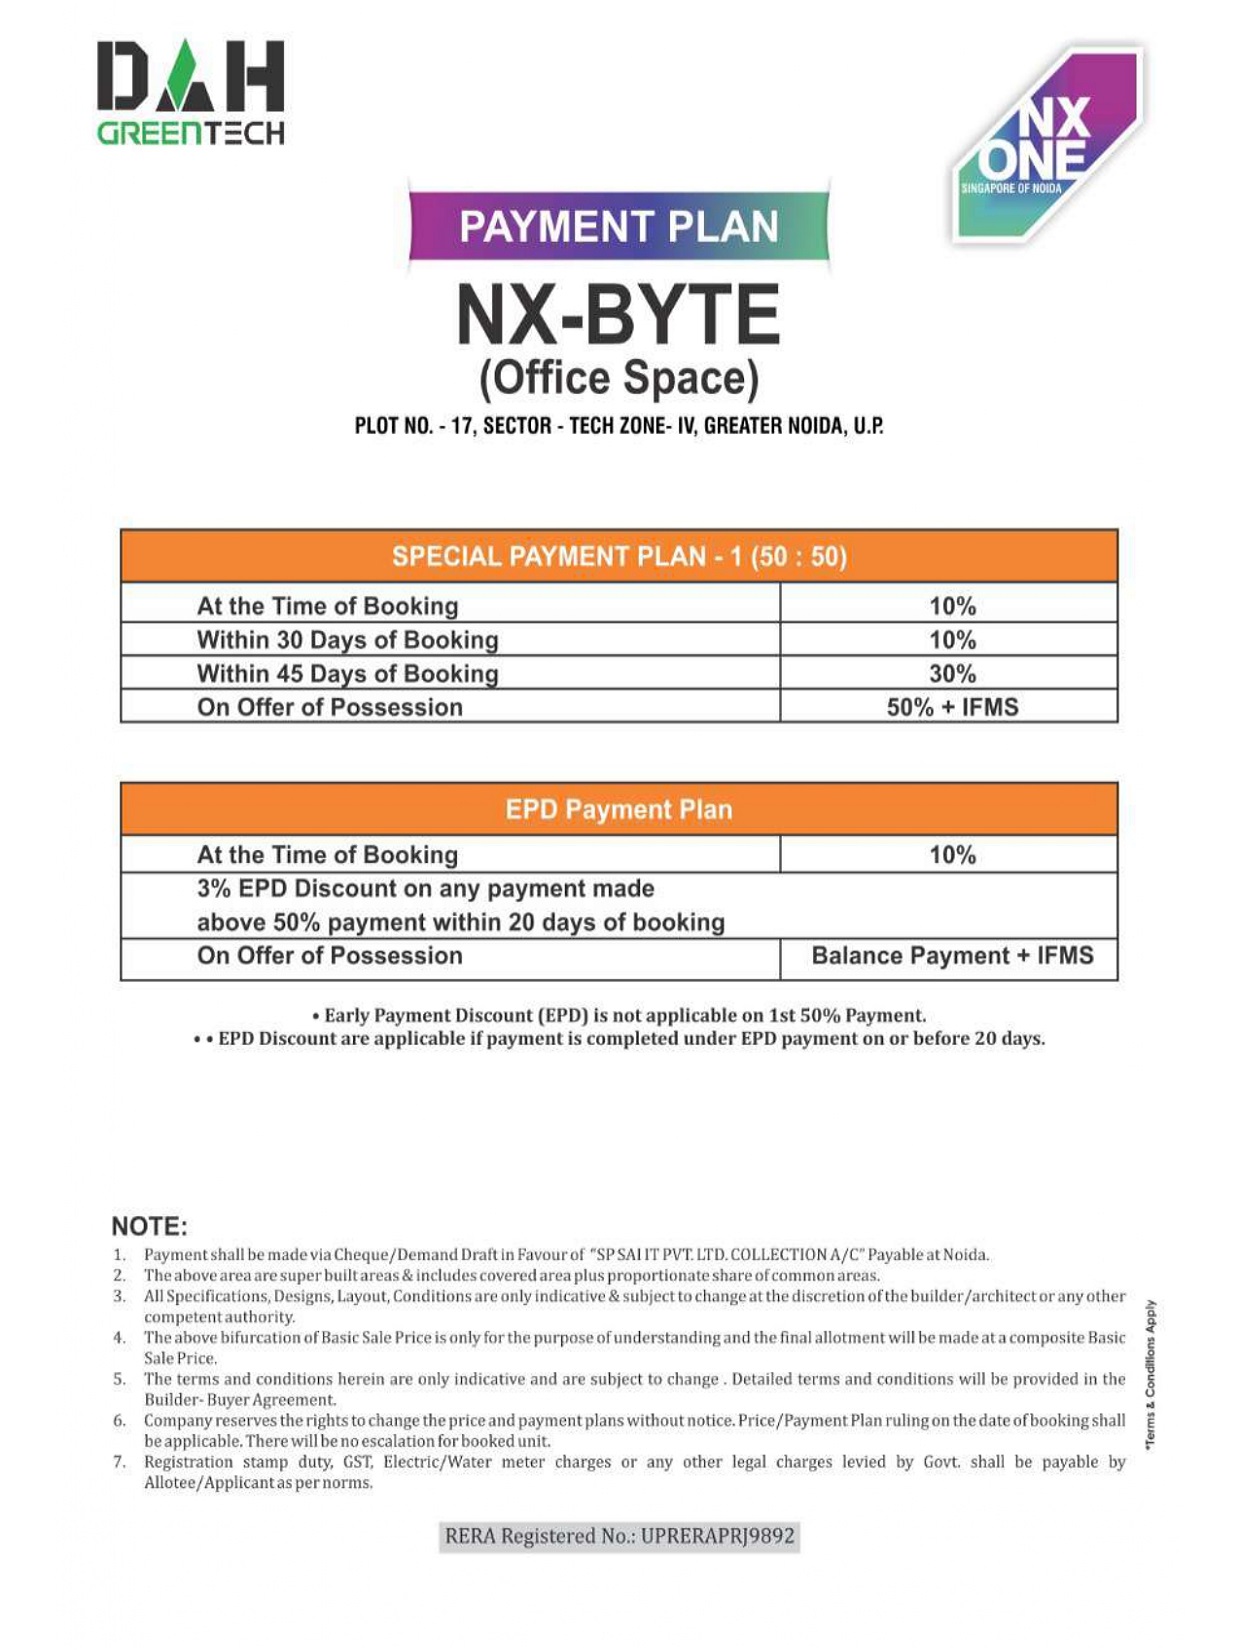 NX Byte payment plan